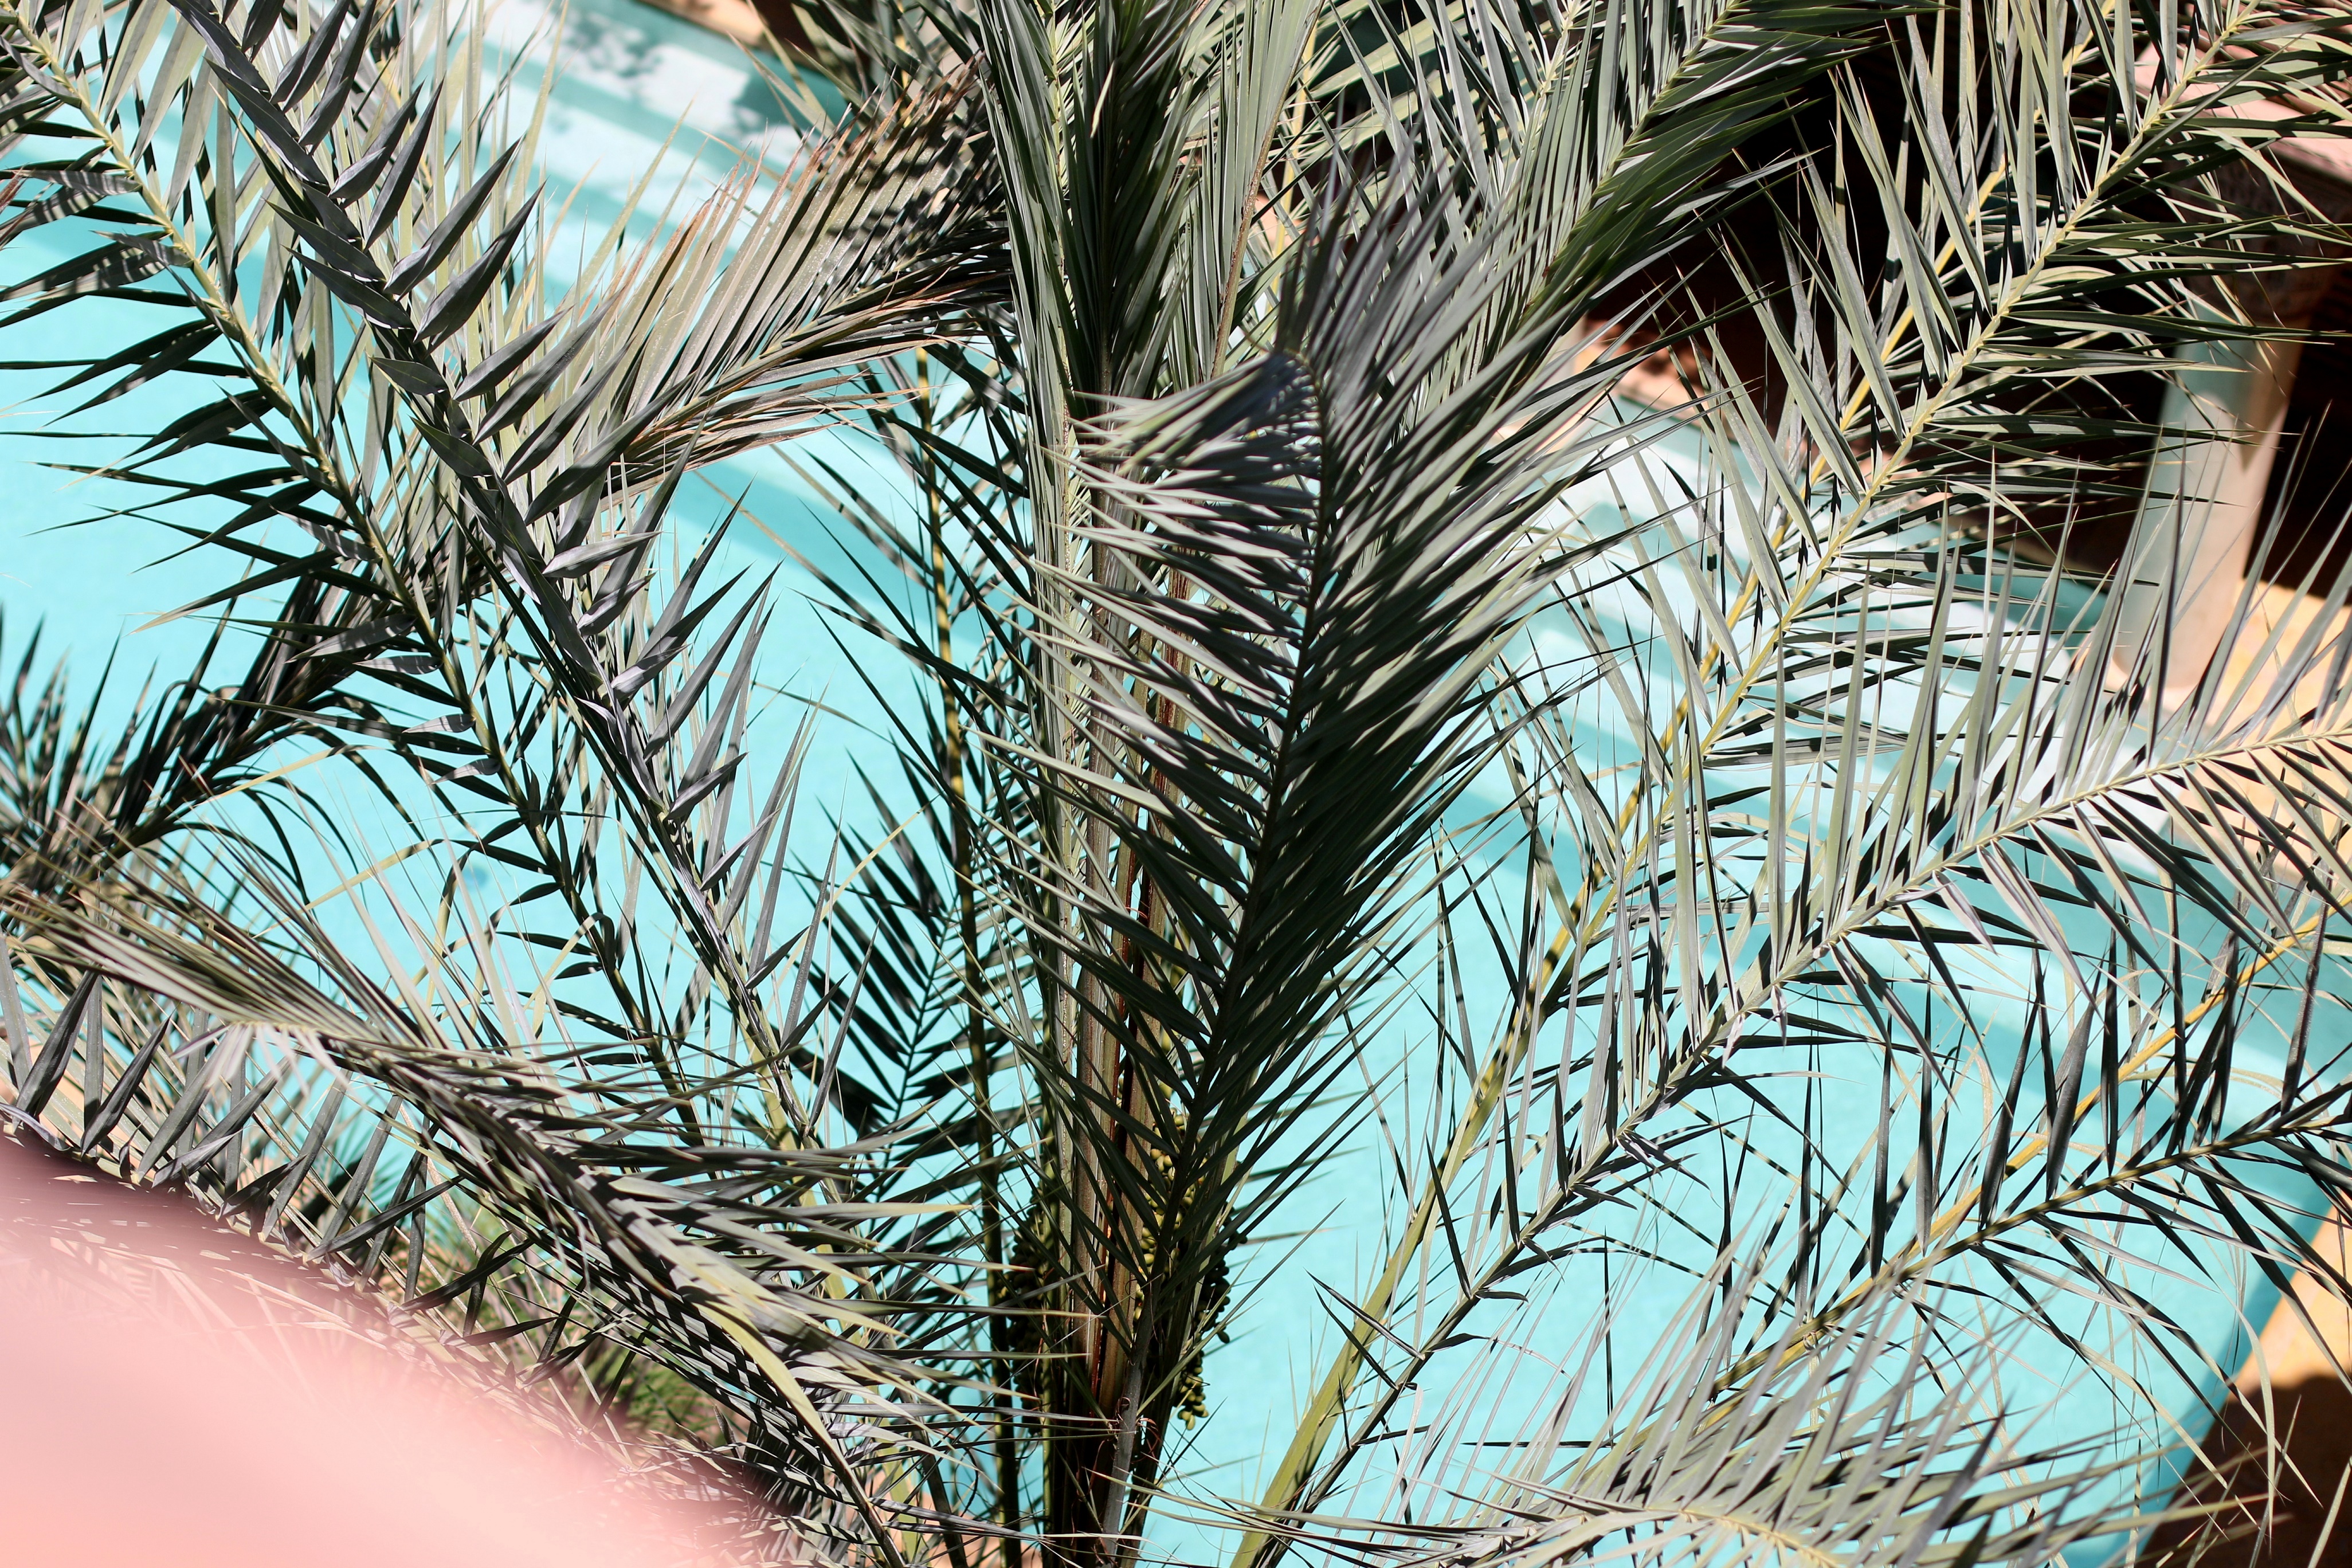 la sultana marrakech pool riad patio palms travelblog hotel review experience travelblogger